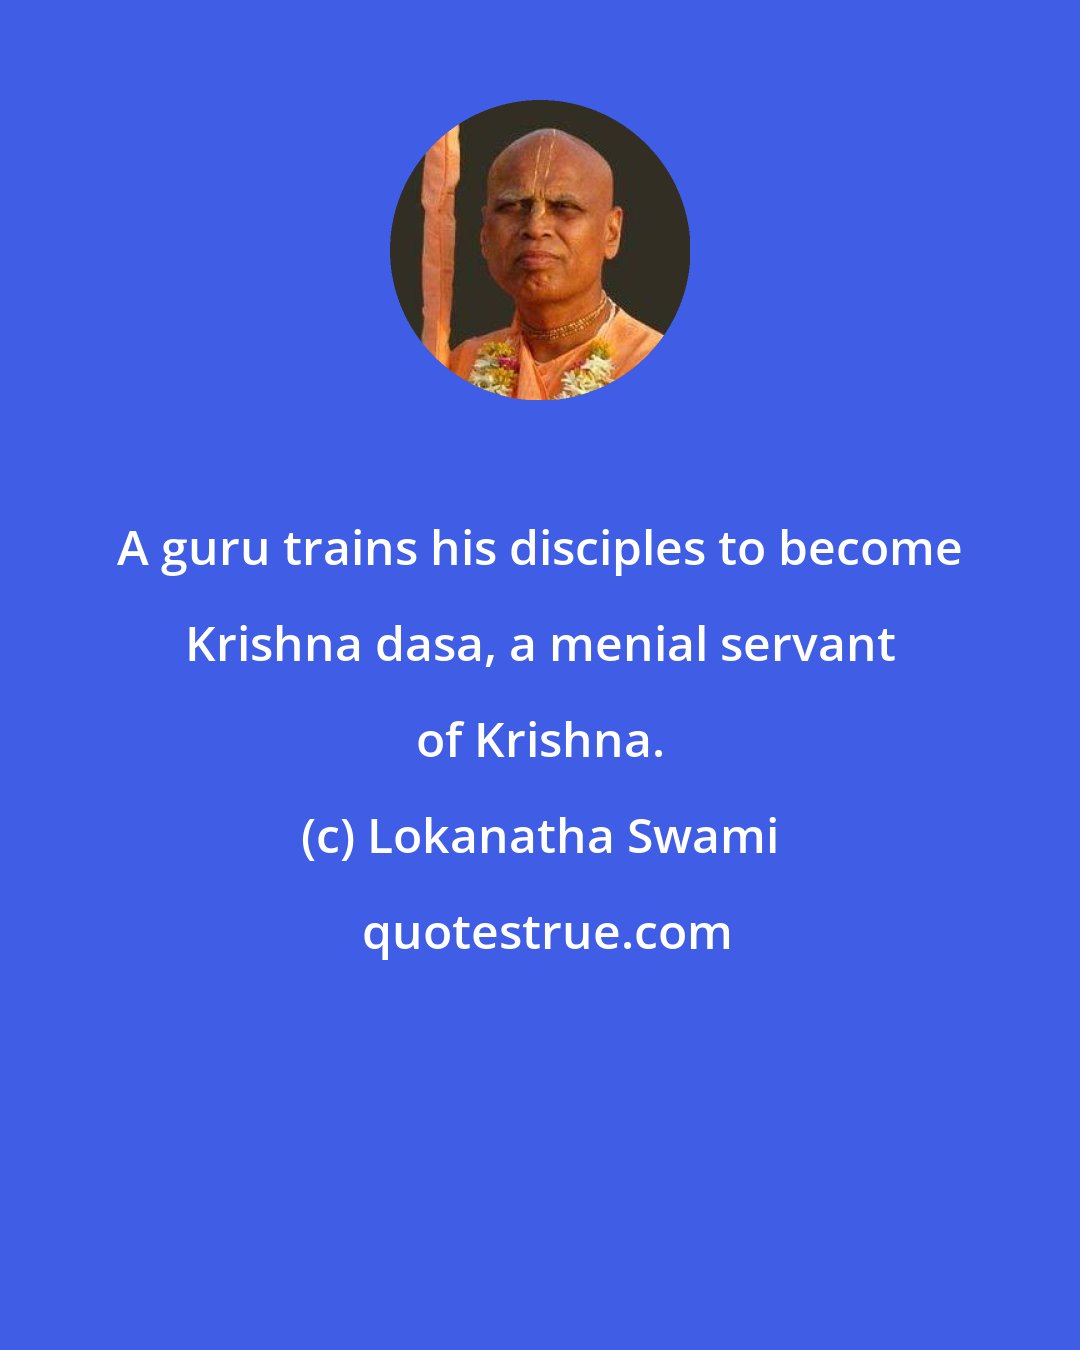 Lokanatha Swami: A guru trains his disciples to become Krishna dasa, a menial servant of Krishna.